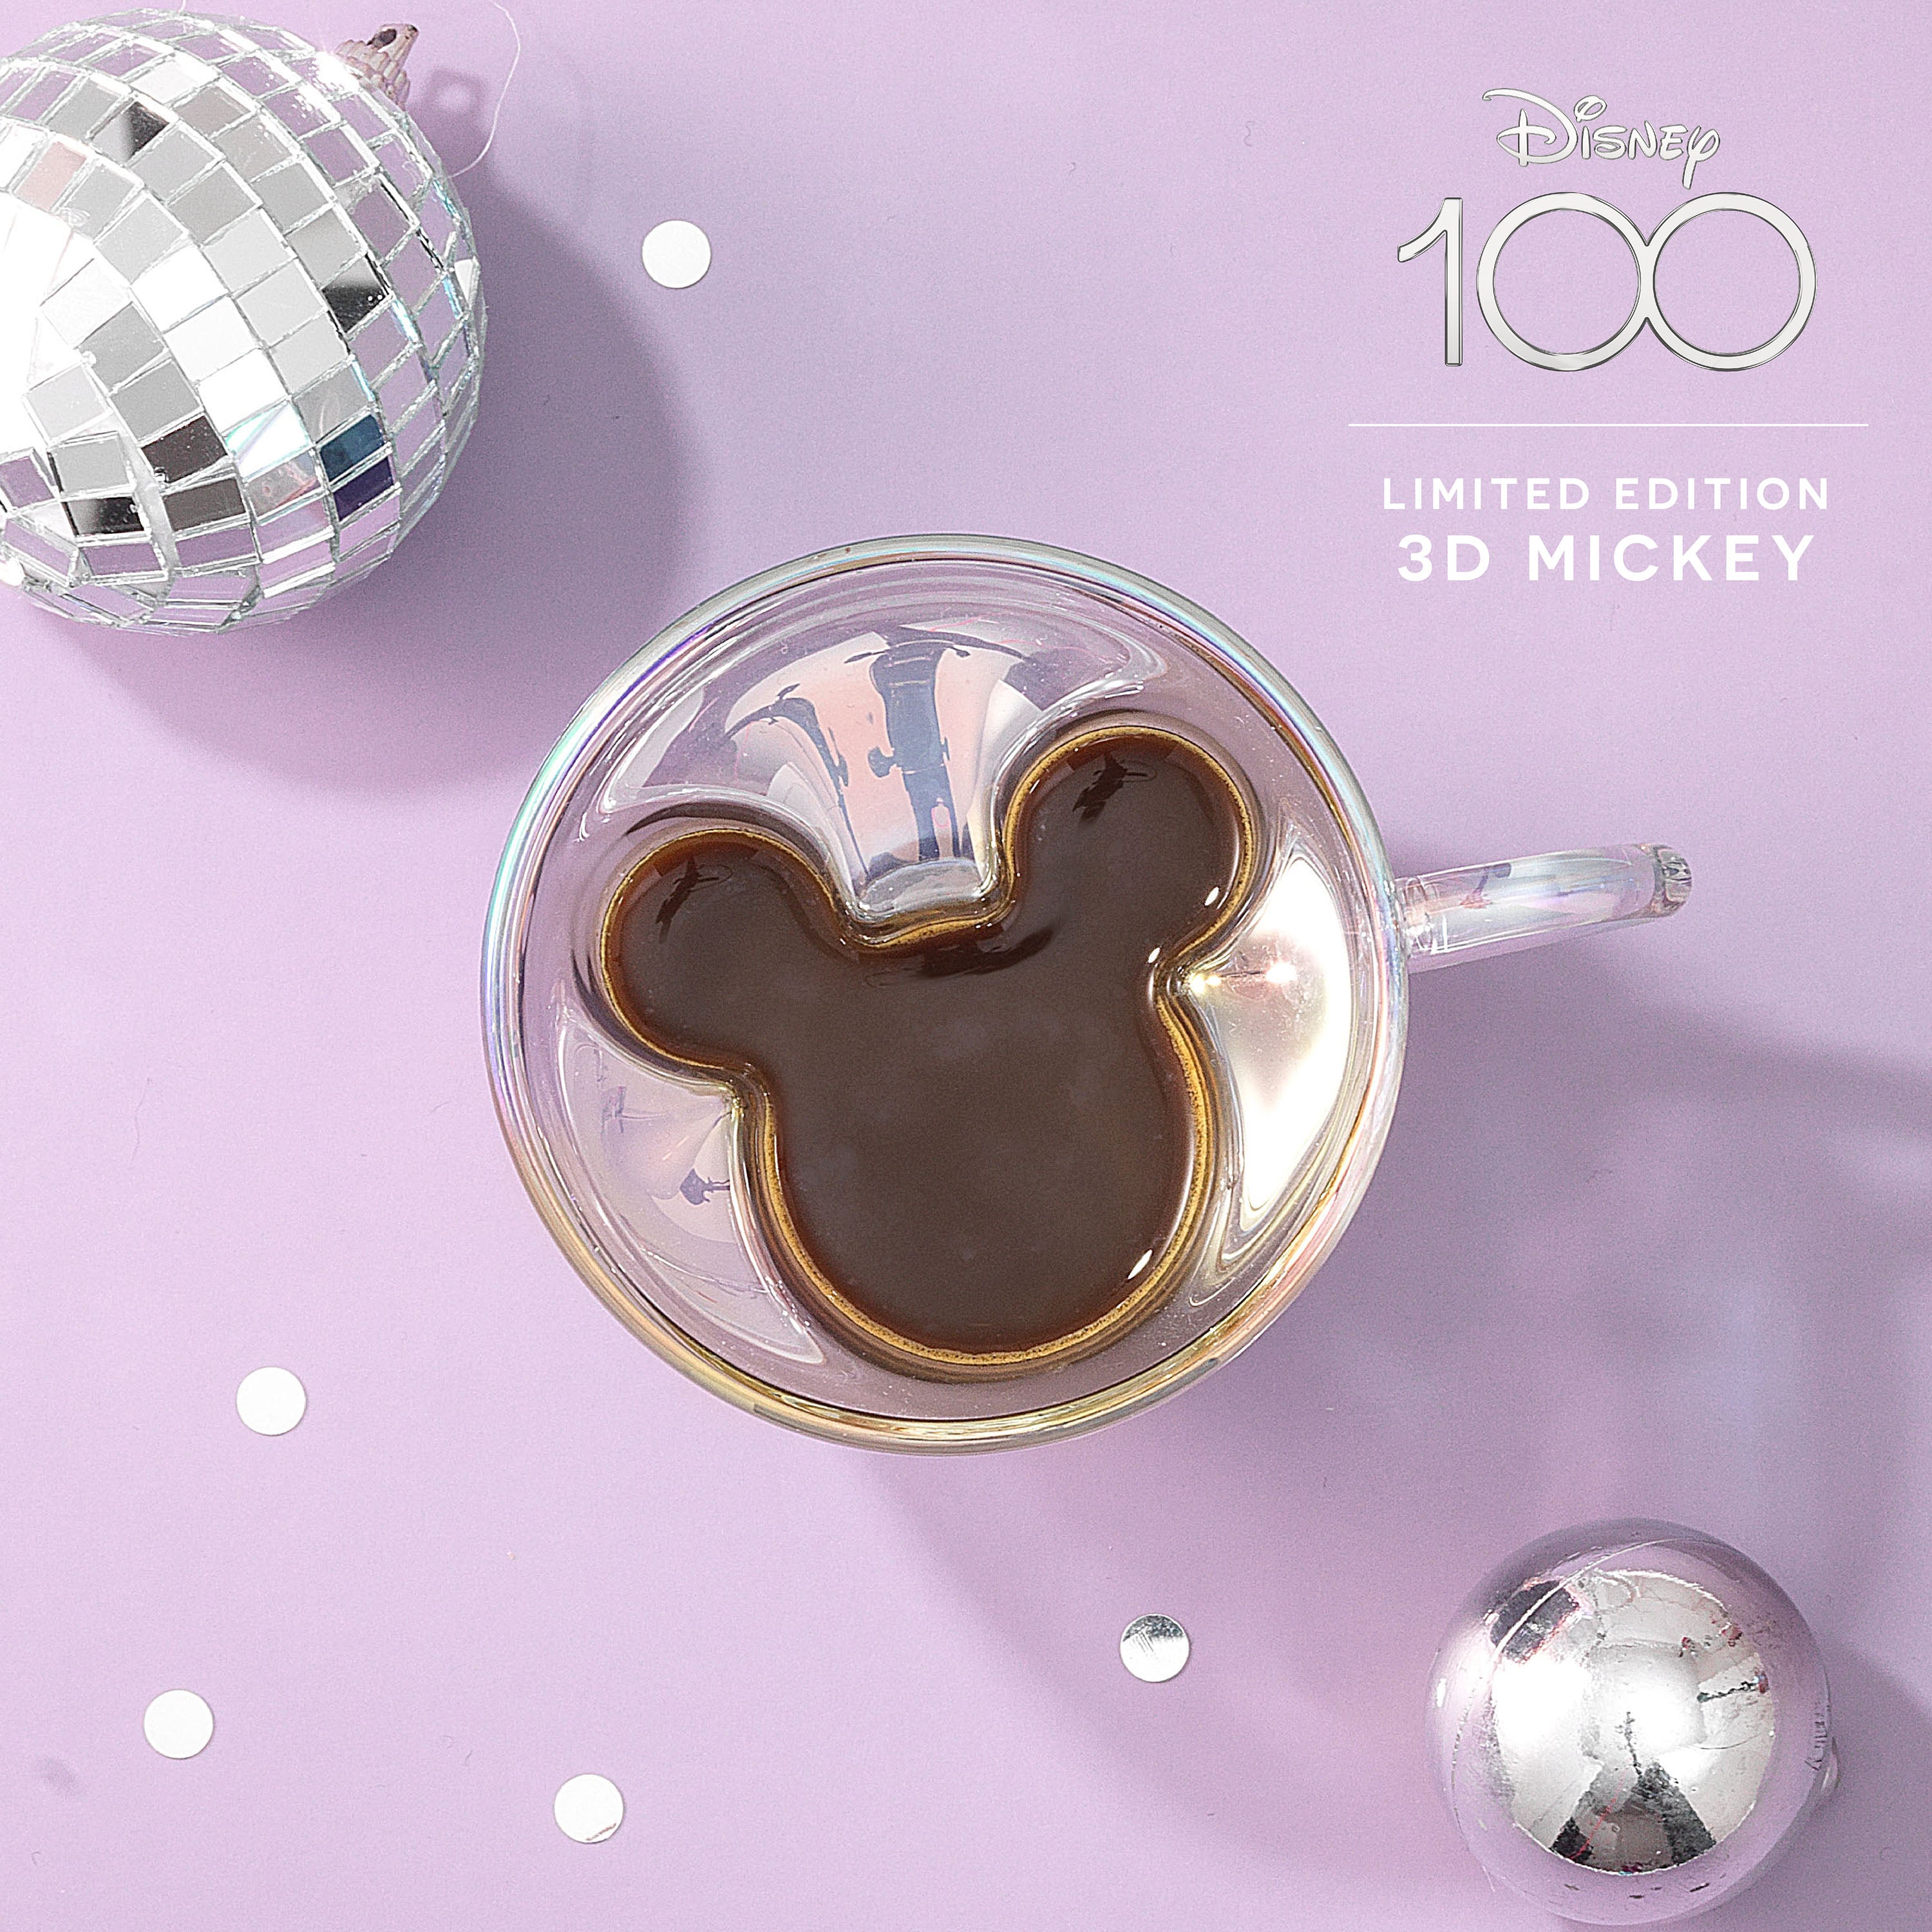 Disney100 Limited Edition 3D Mickey Double Wall Espresso Glass - 5.4 oz